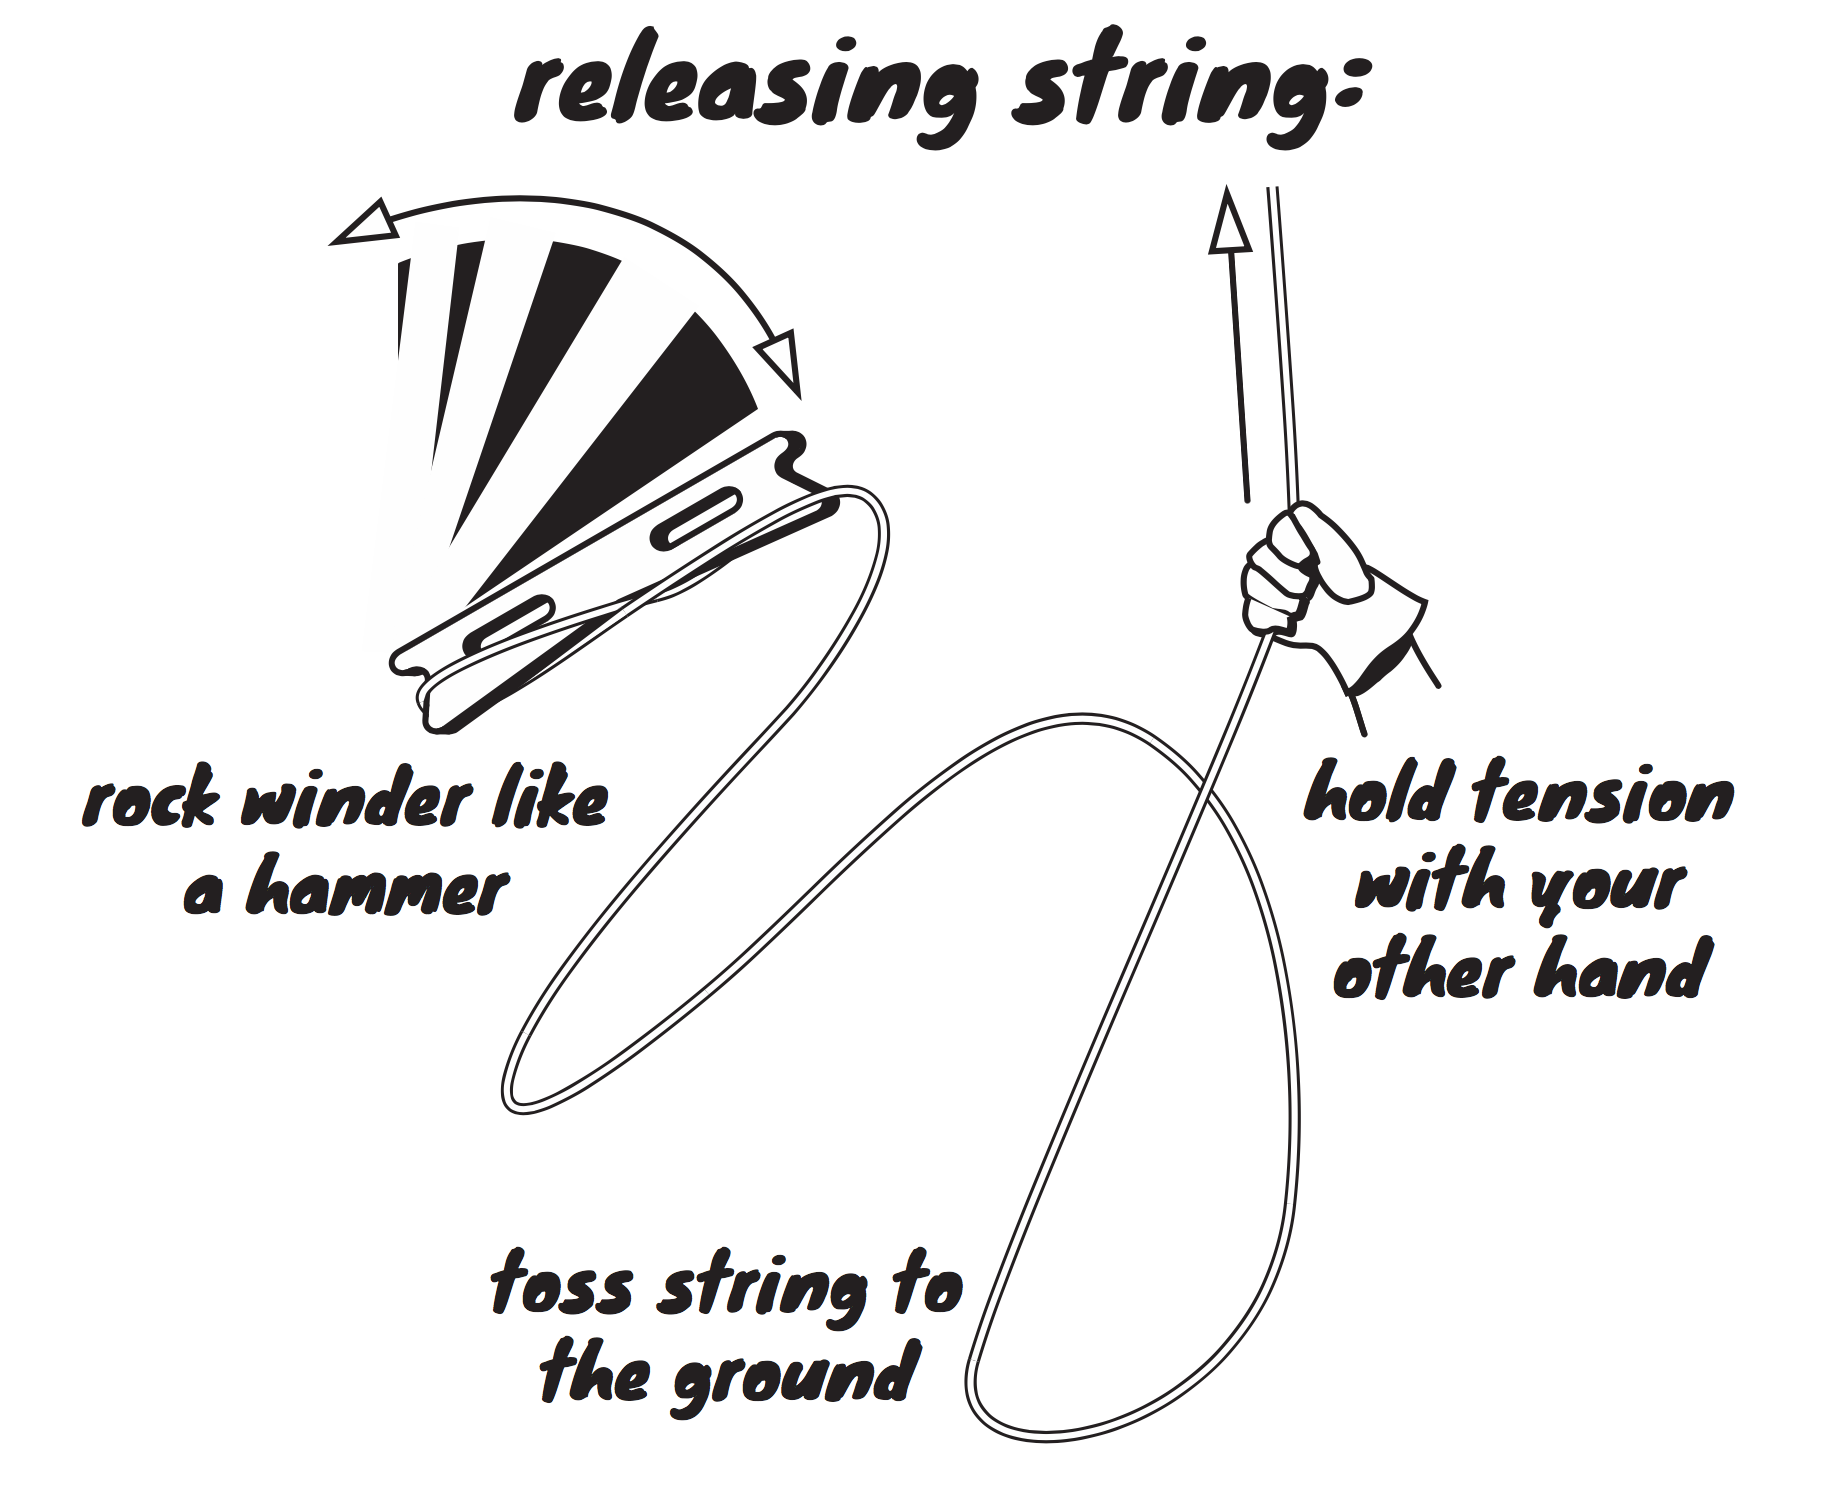 releasing string